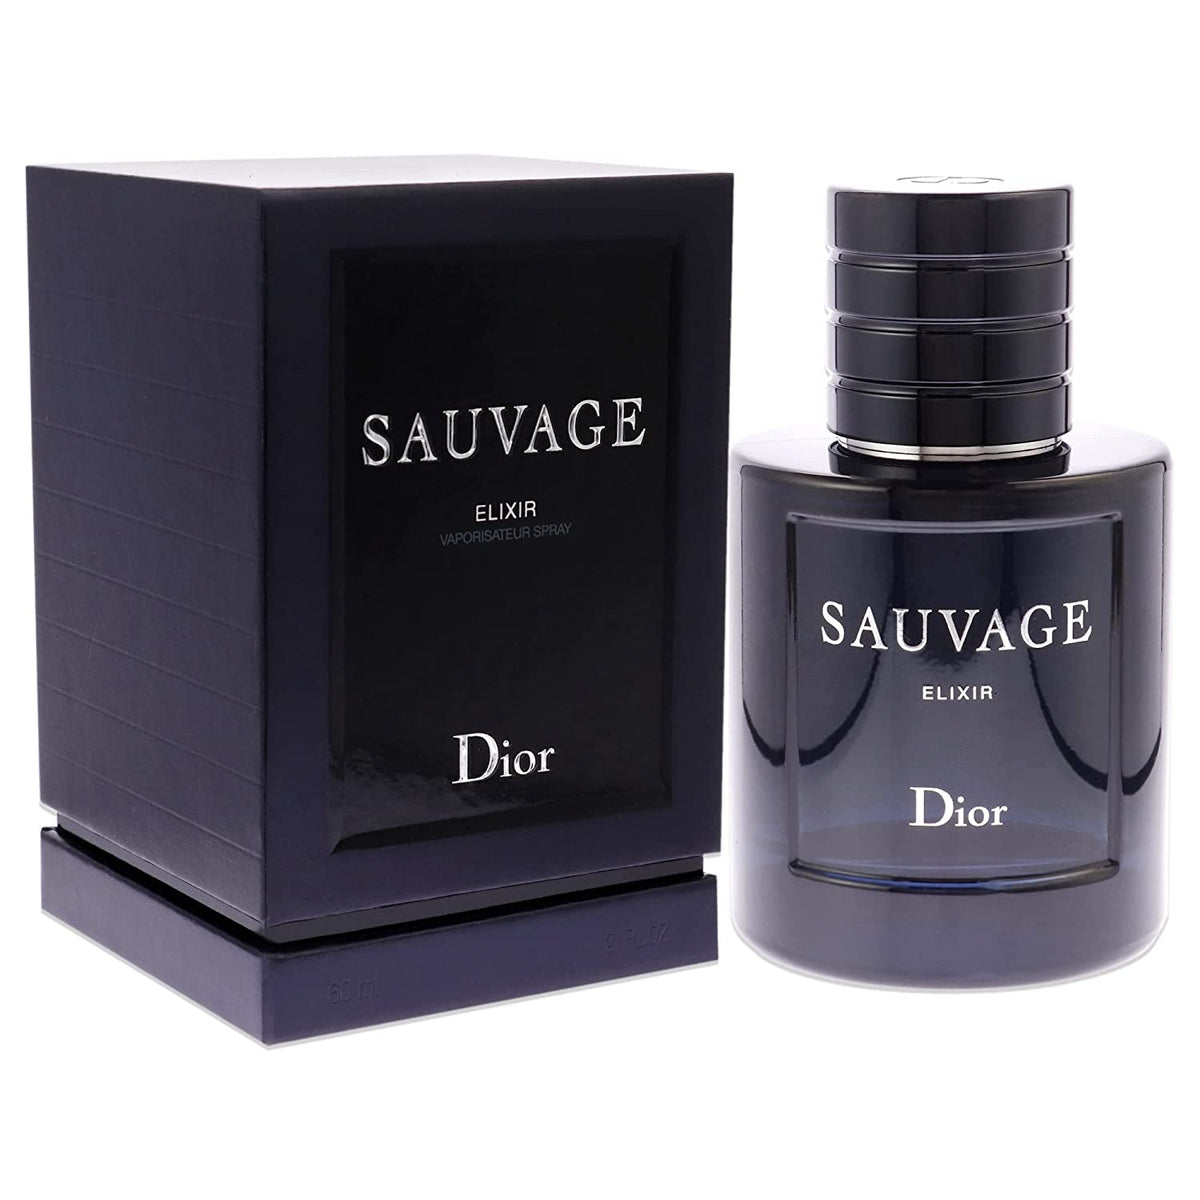 Dior Sauvage Elixir - Parfum - For Men -60ml